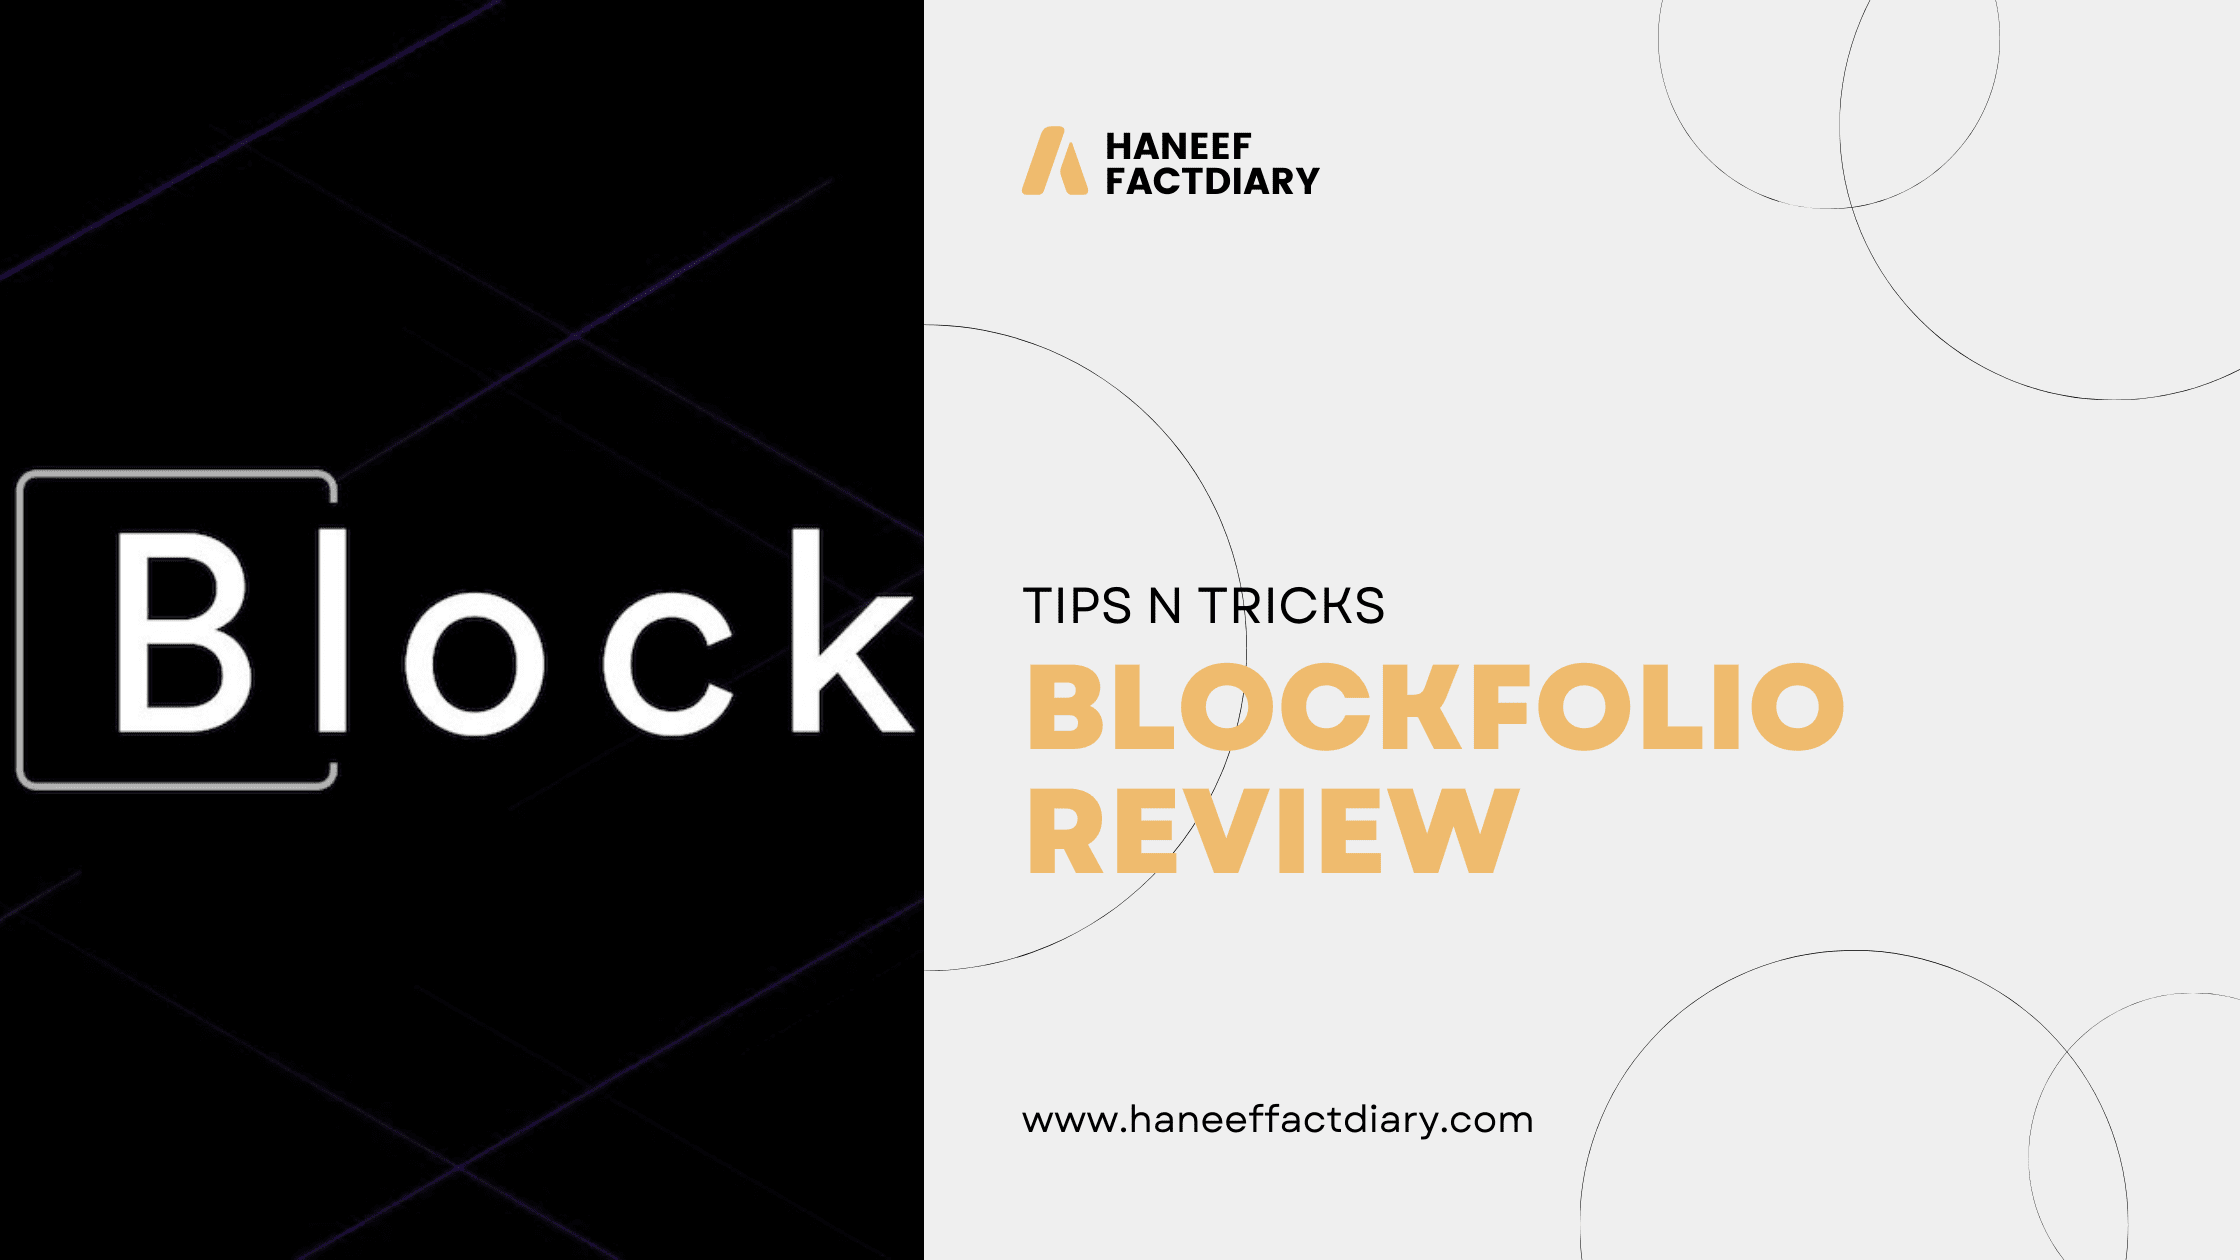 Blockfolio Review